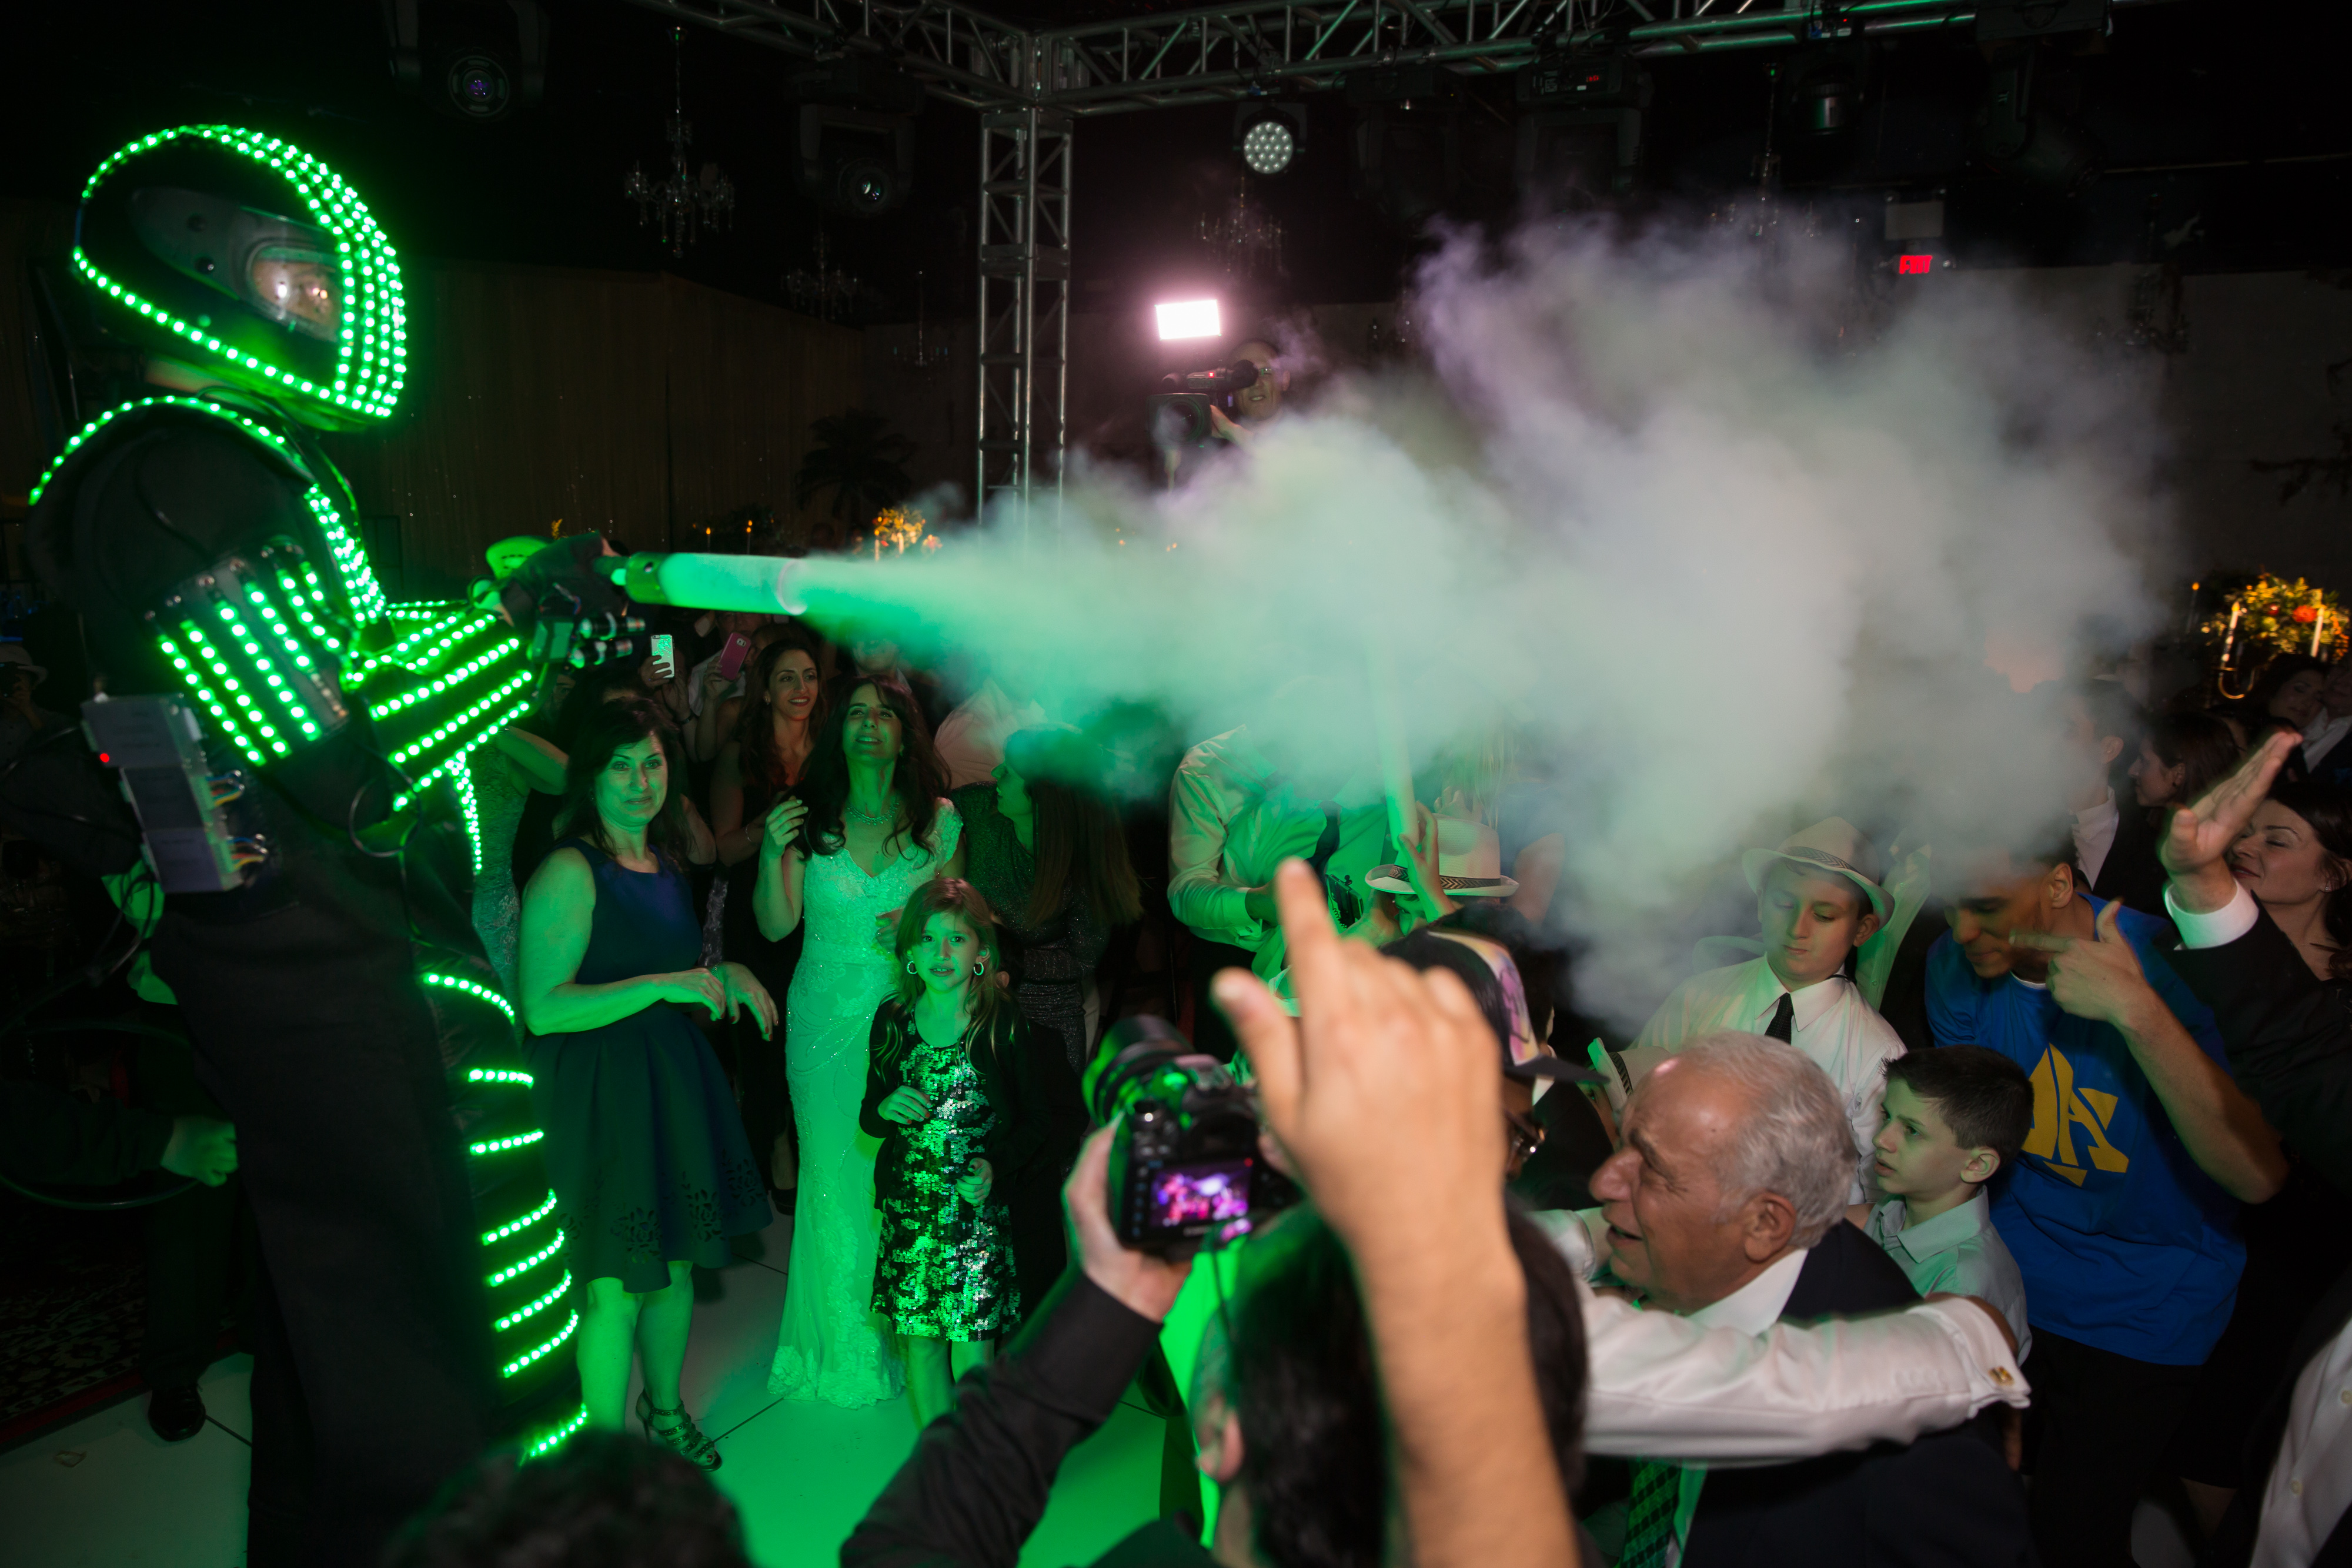 LED robot suit man blasts CO2 bursts over crowd